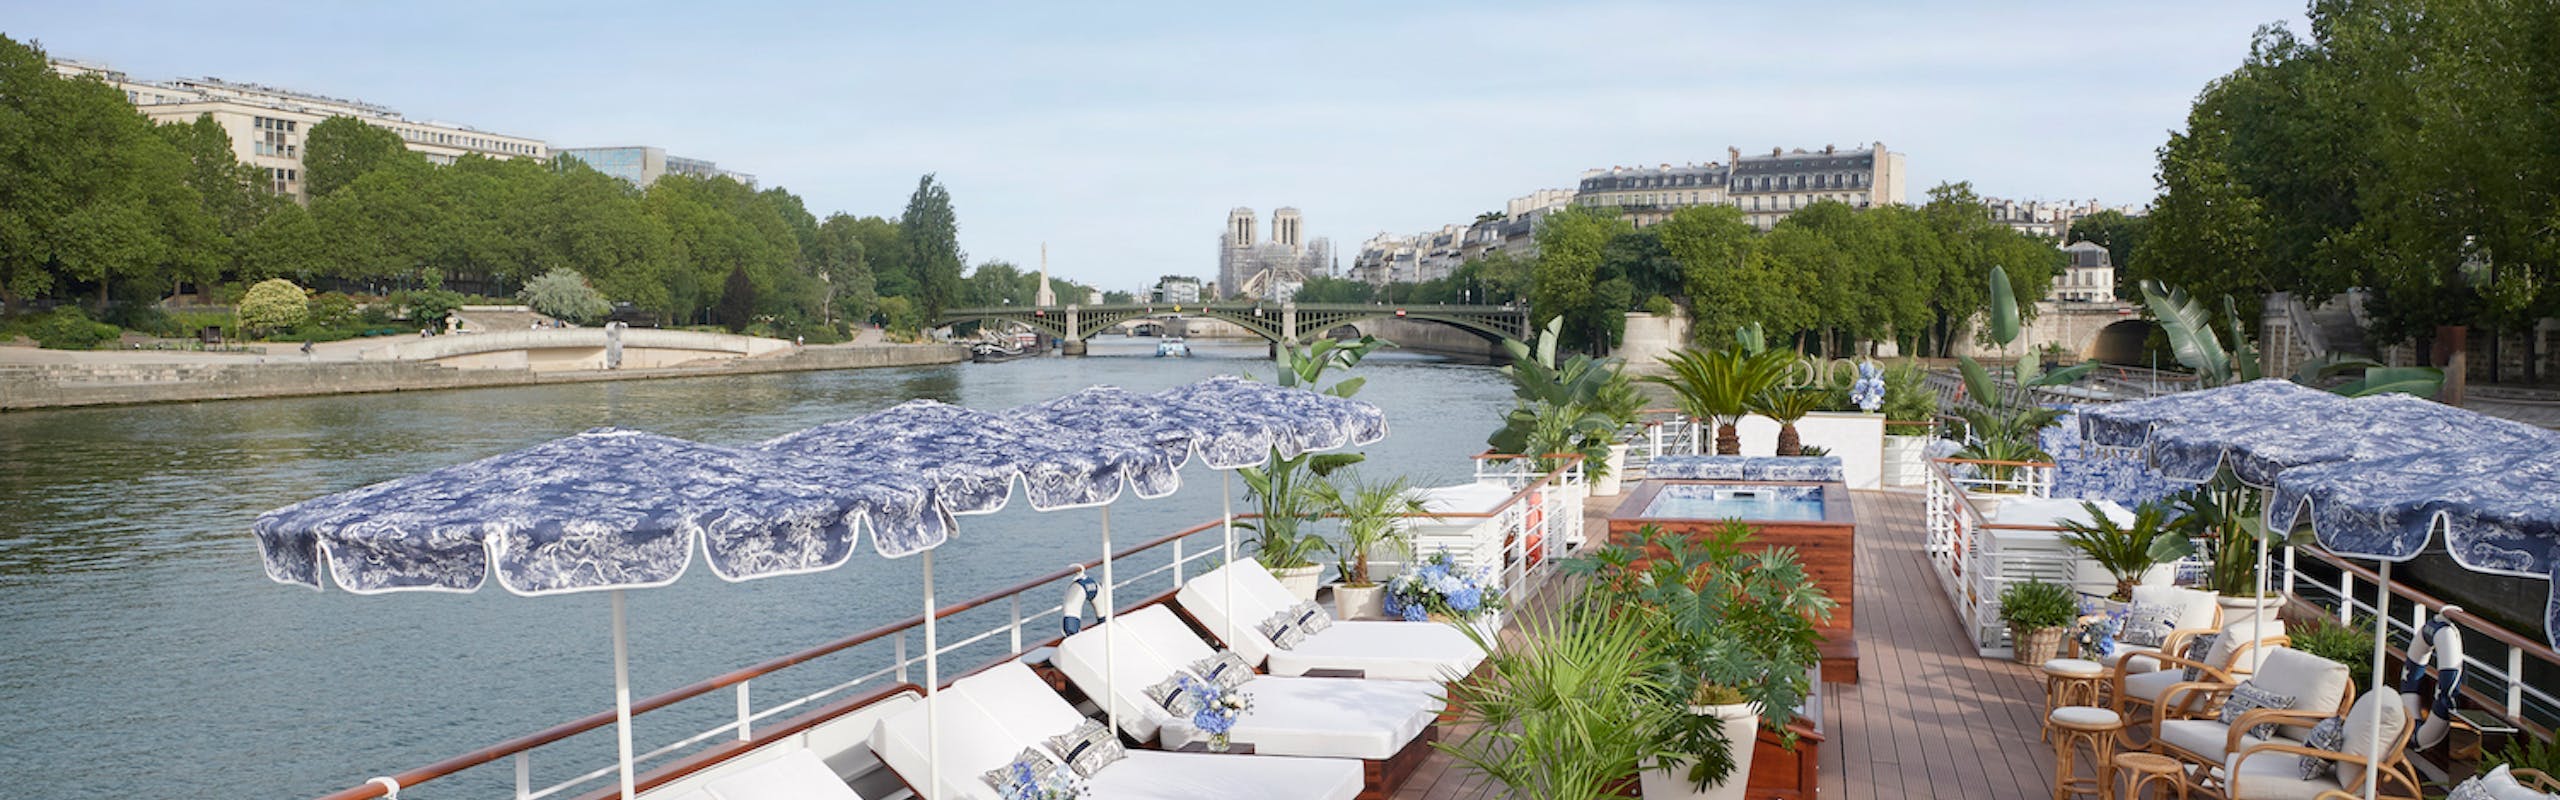 Dior Spa Cruise boat deck on the seine